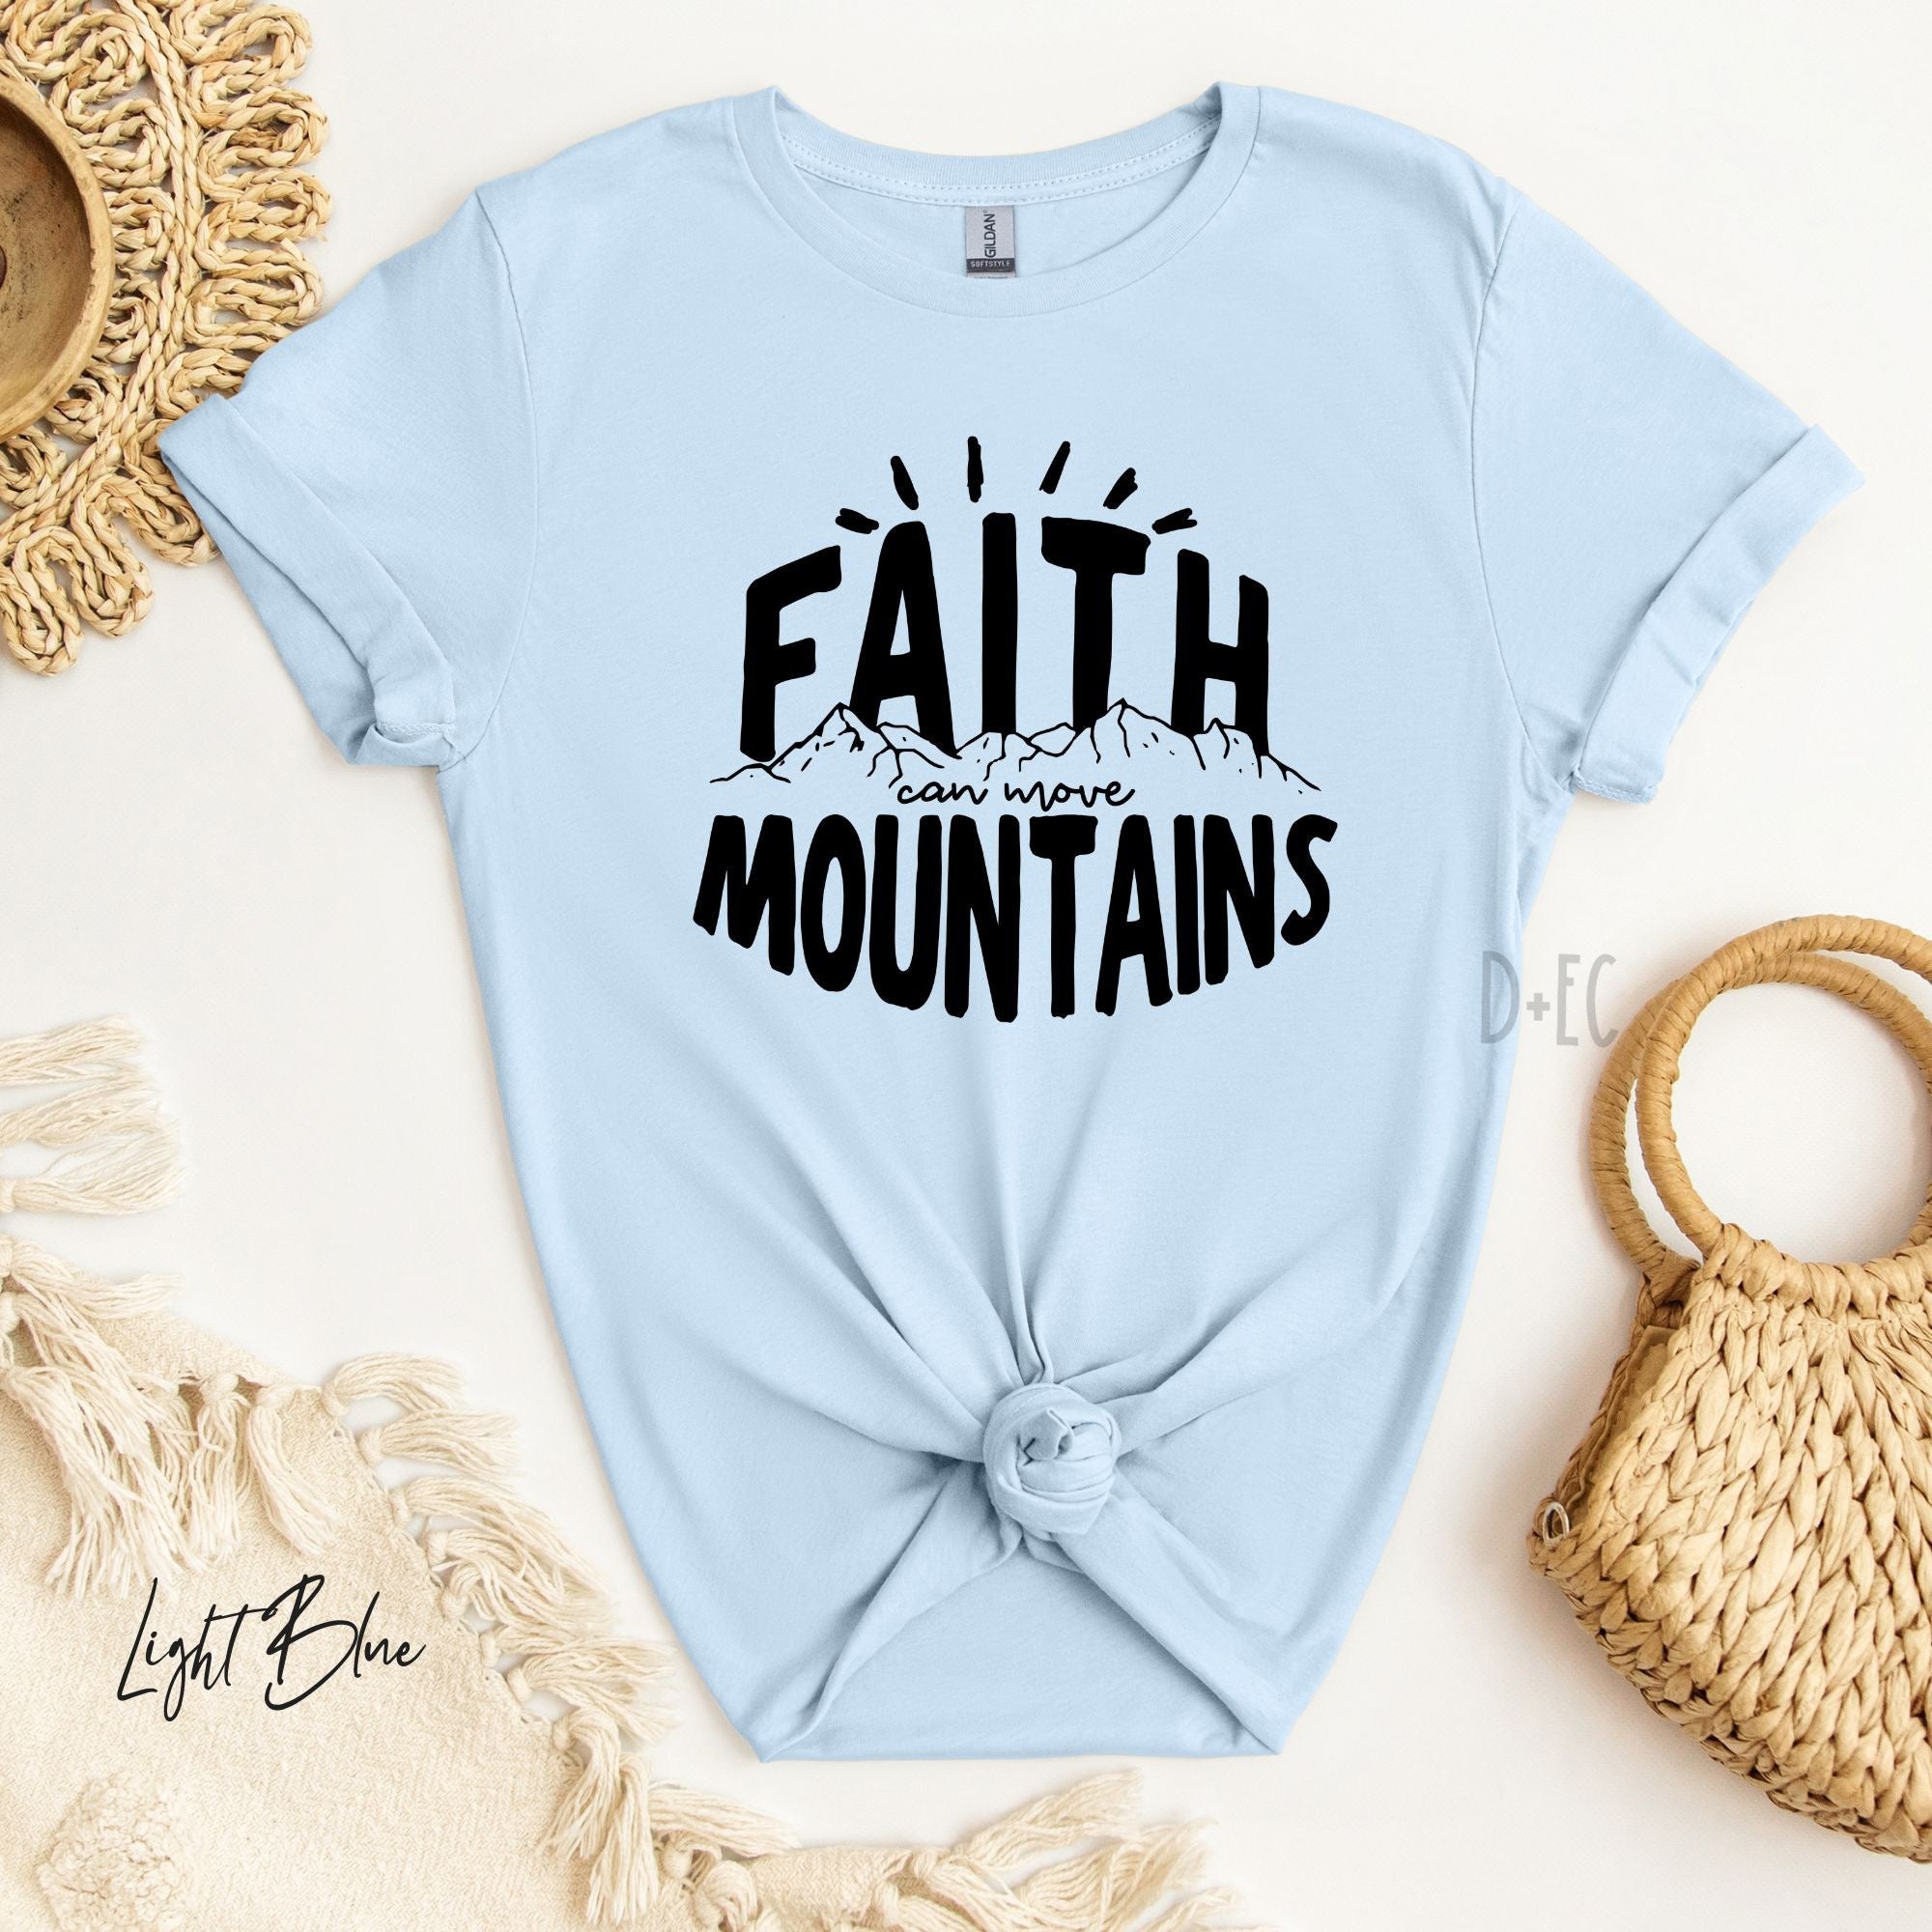 Faith can move mountains-Black Font